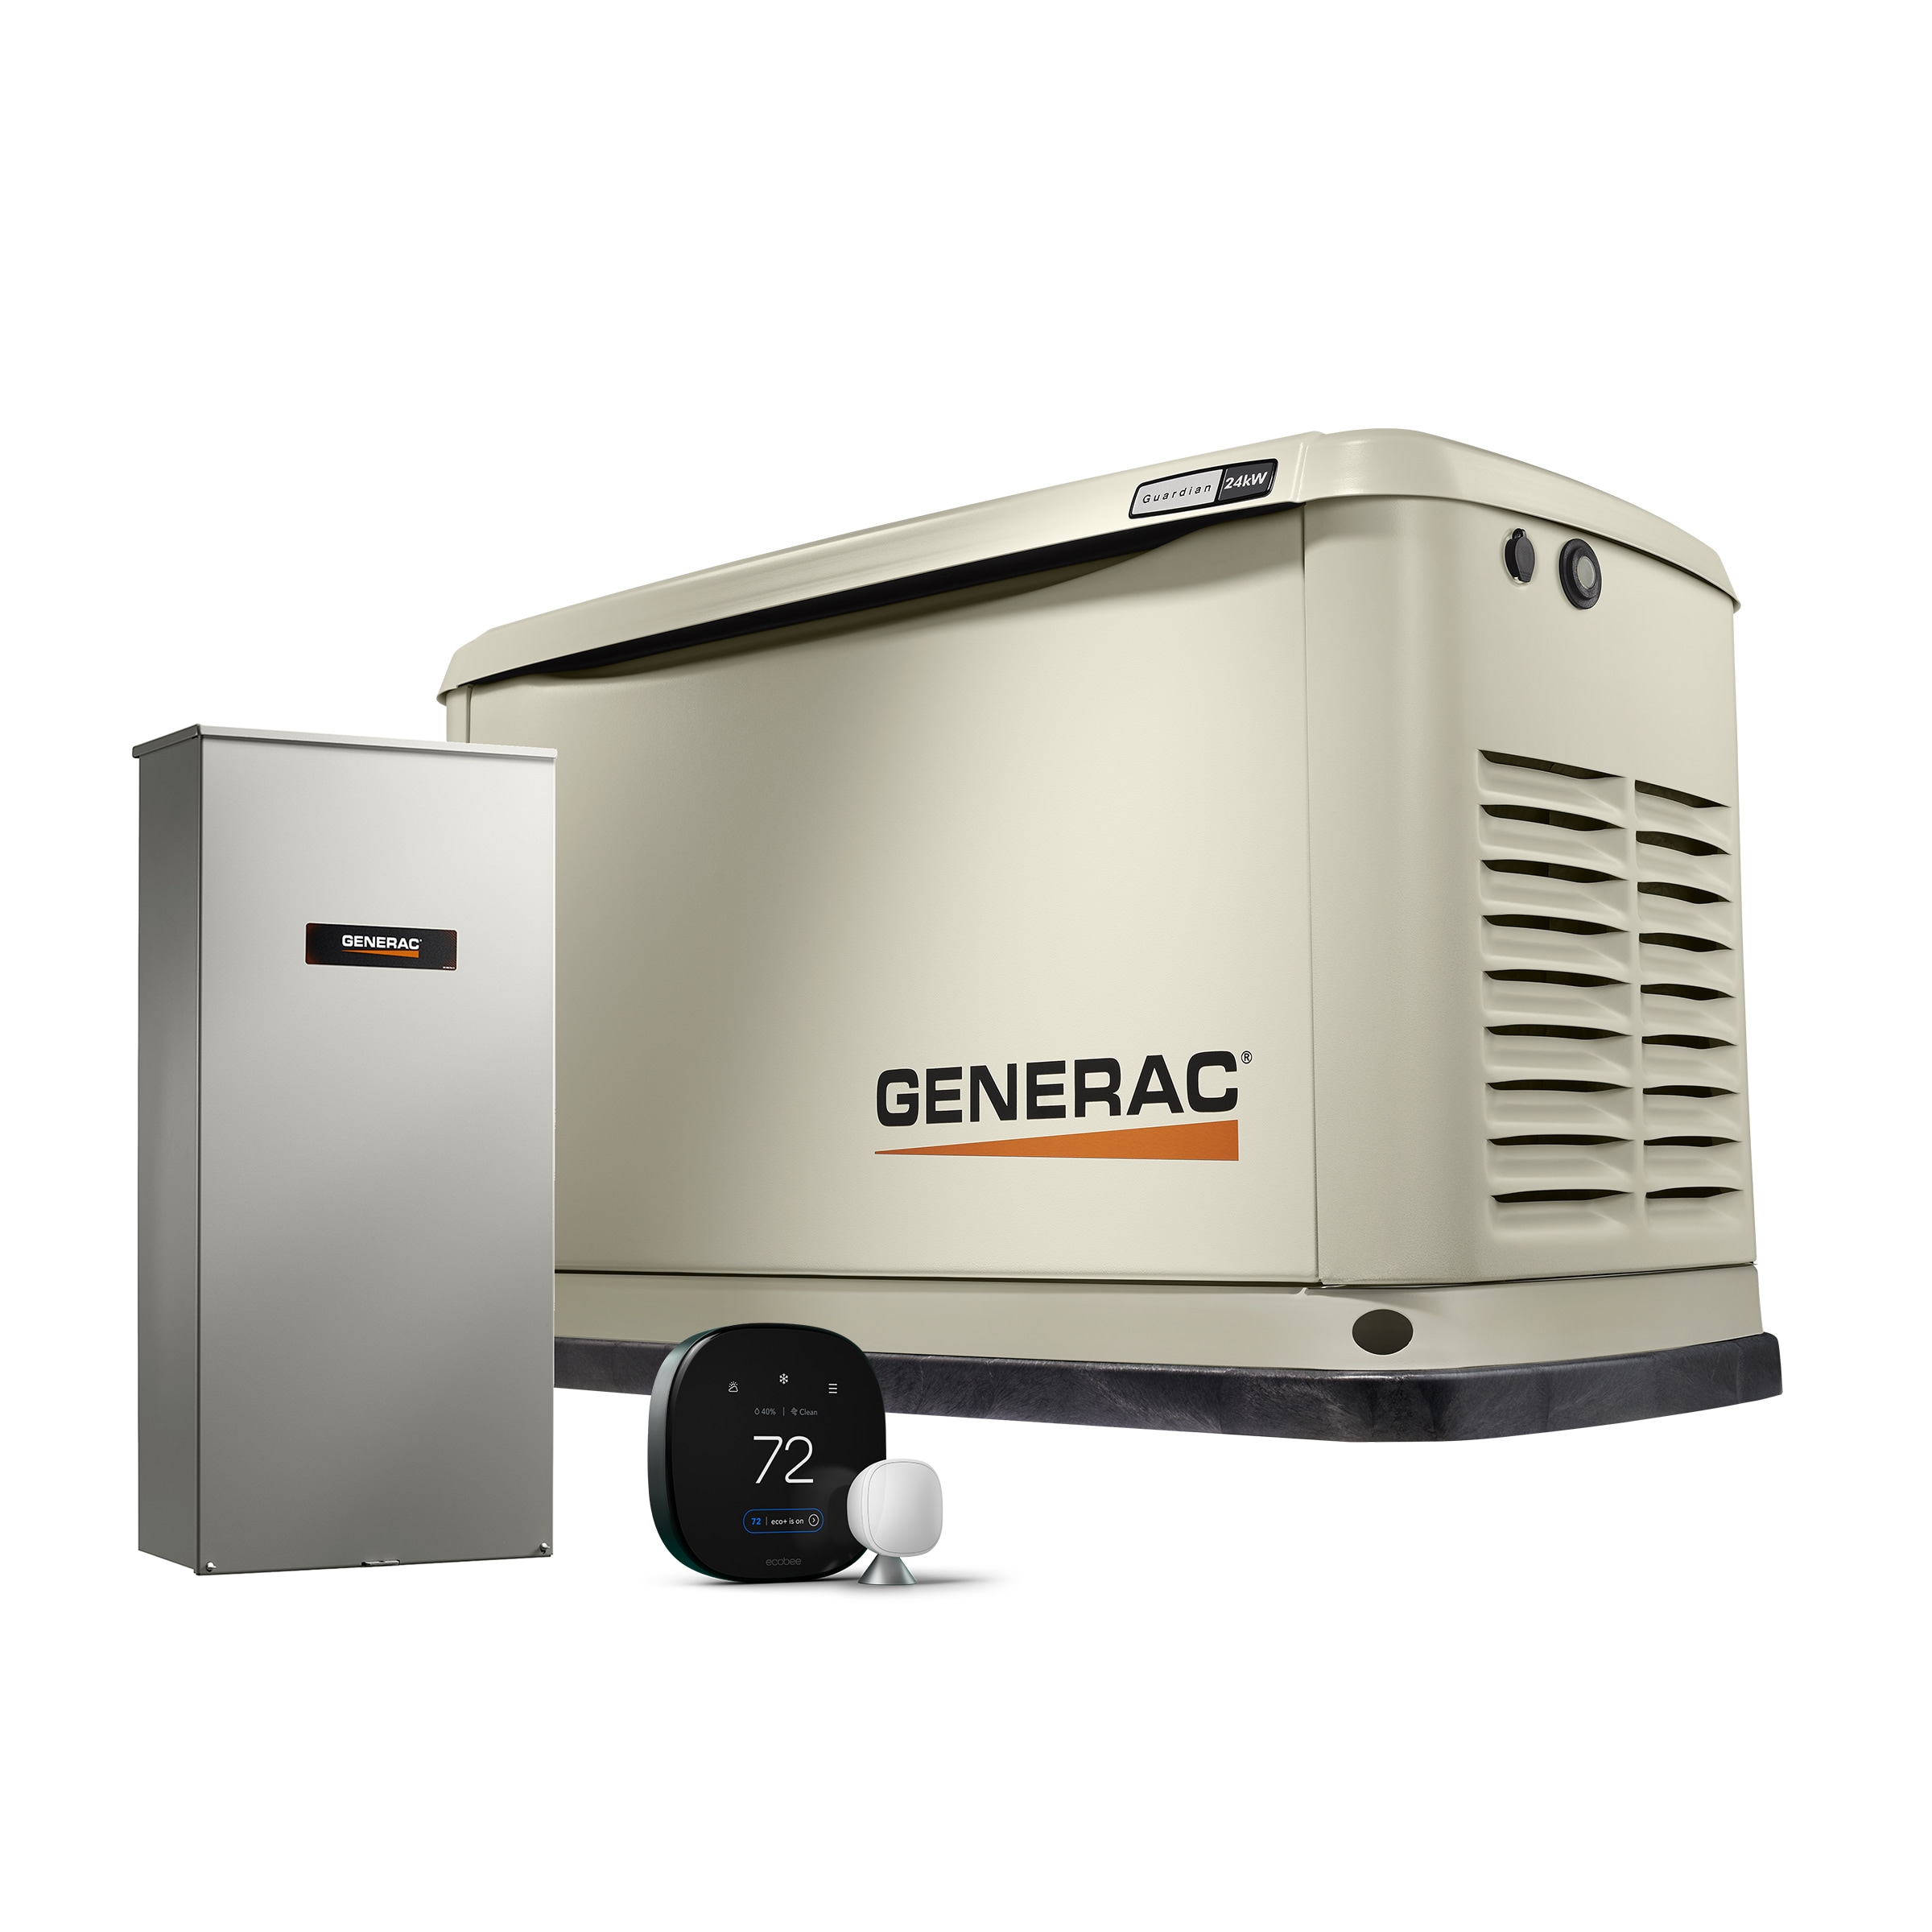 Generac 24kW Home Standby Generator + ecobee Smart Thermostat Premium Bundle